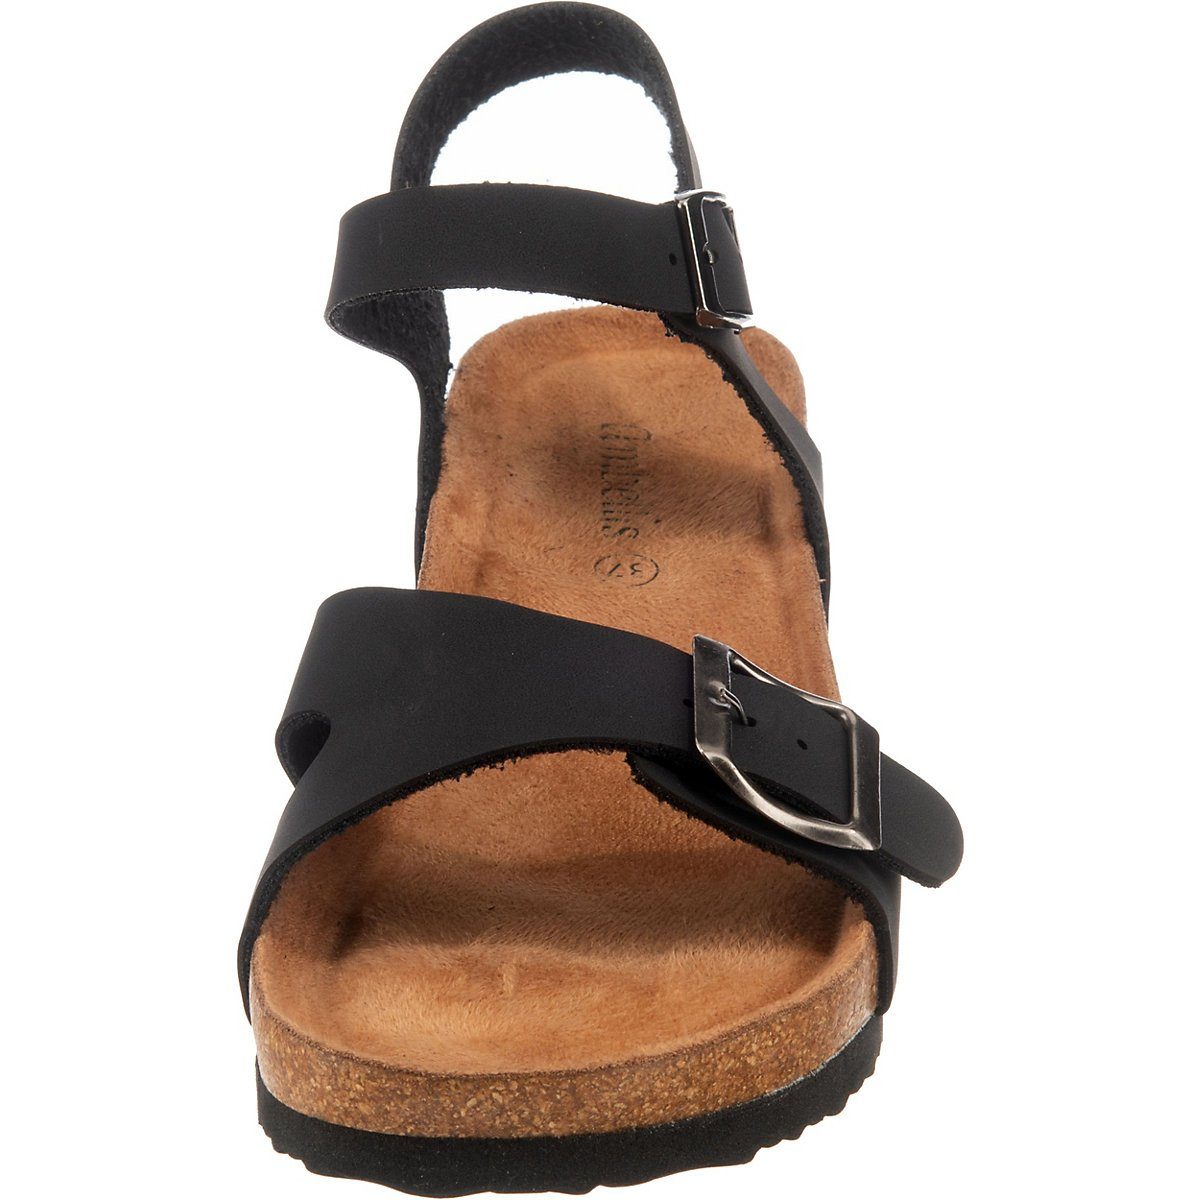 Schuhe Sandaletten ambellis Buckle Sandalette mit Keilabsatz Keilsandalette